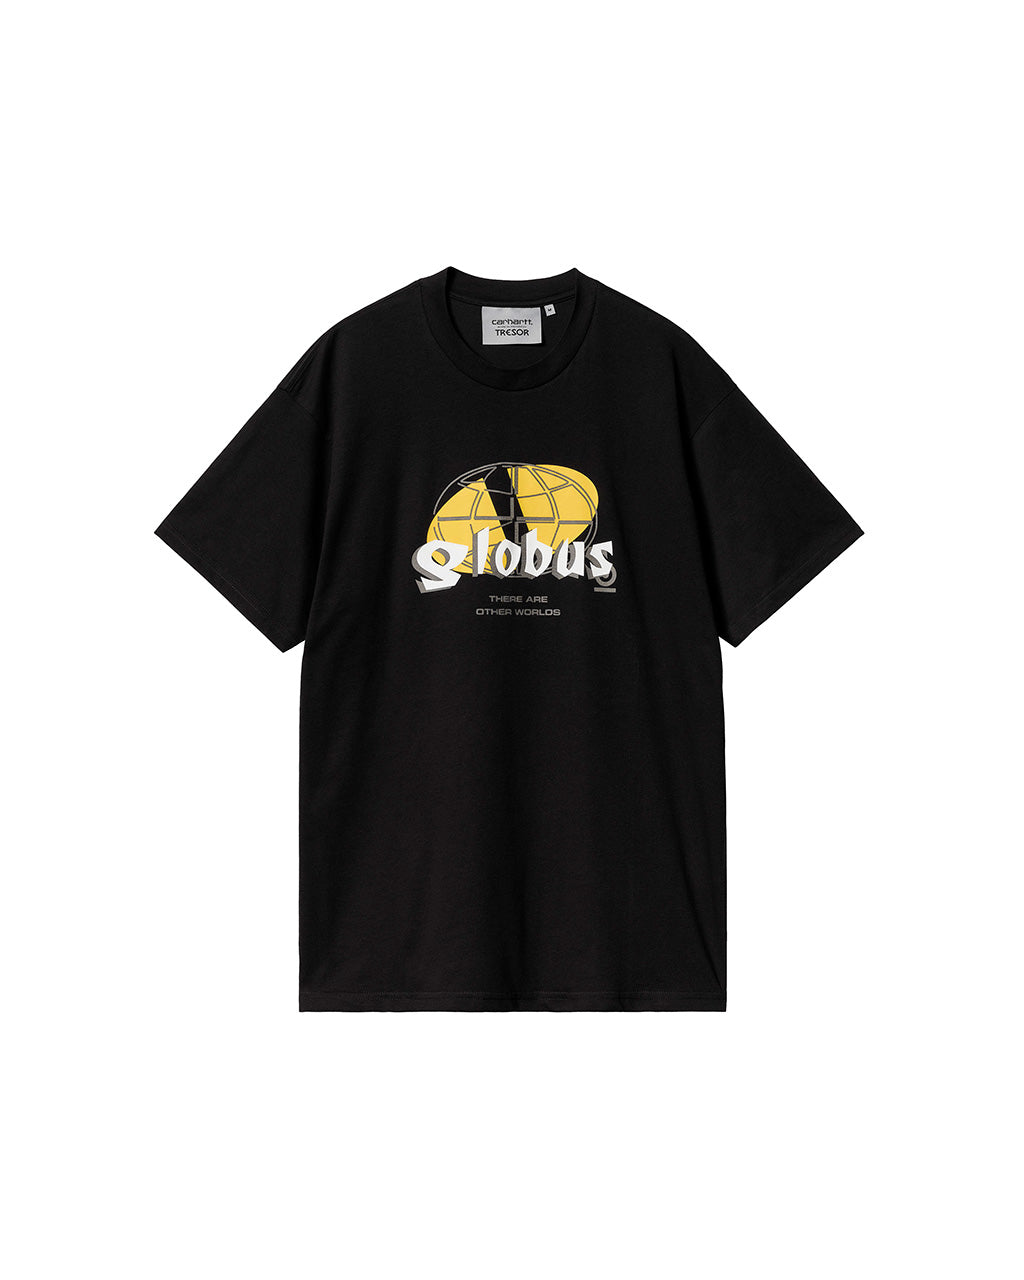 Carhartt WIP x TRESOR Globus S/S T-Shirt